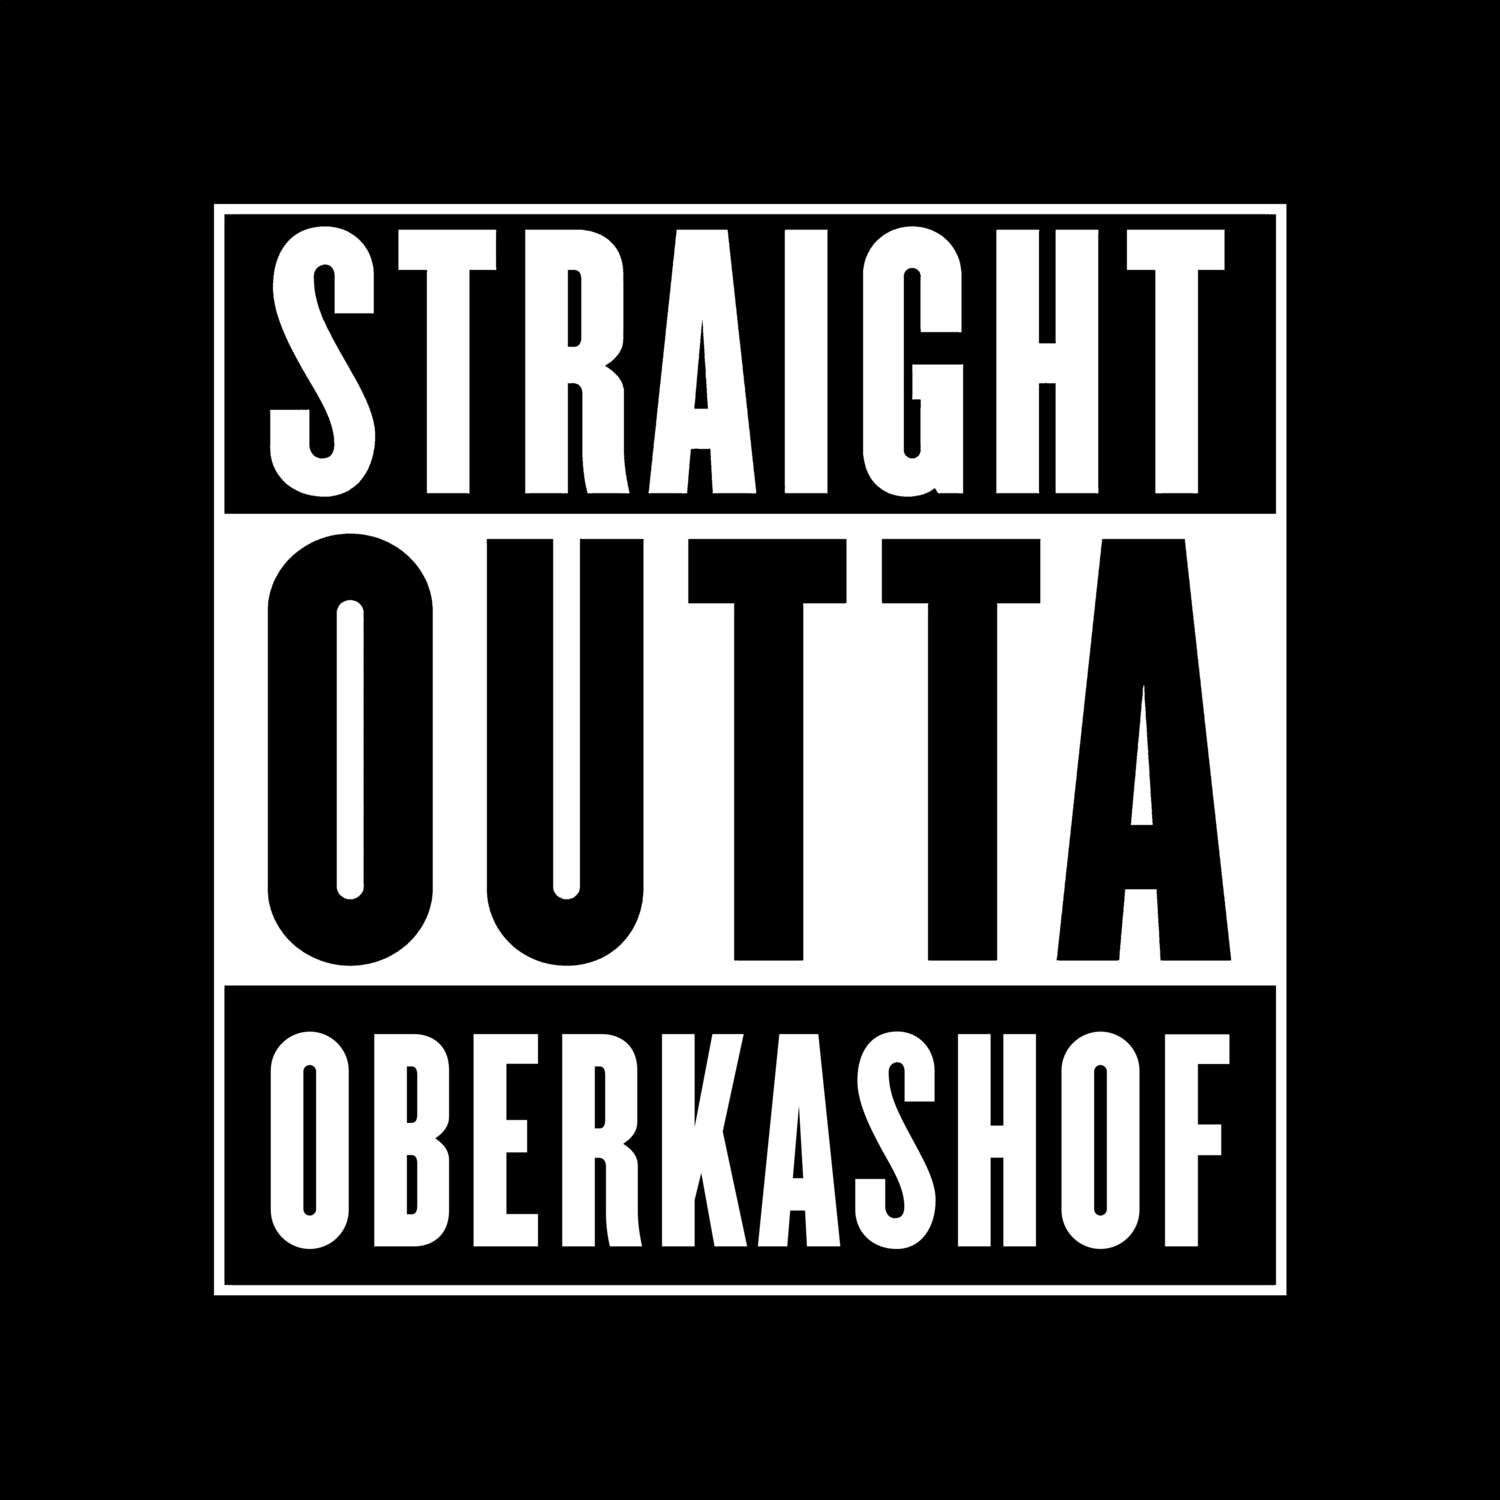 Oberkashof T-Shirt »Straight Outta«